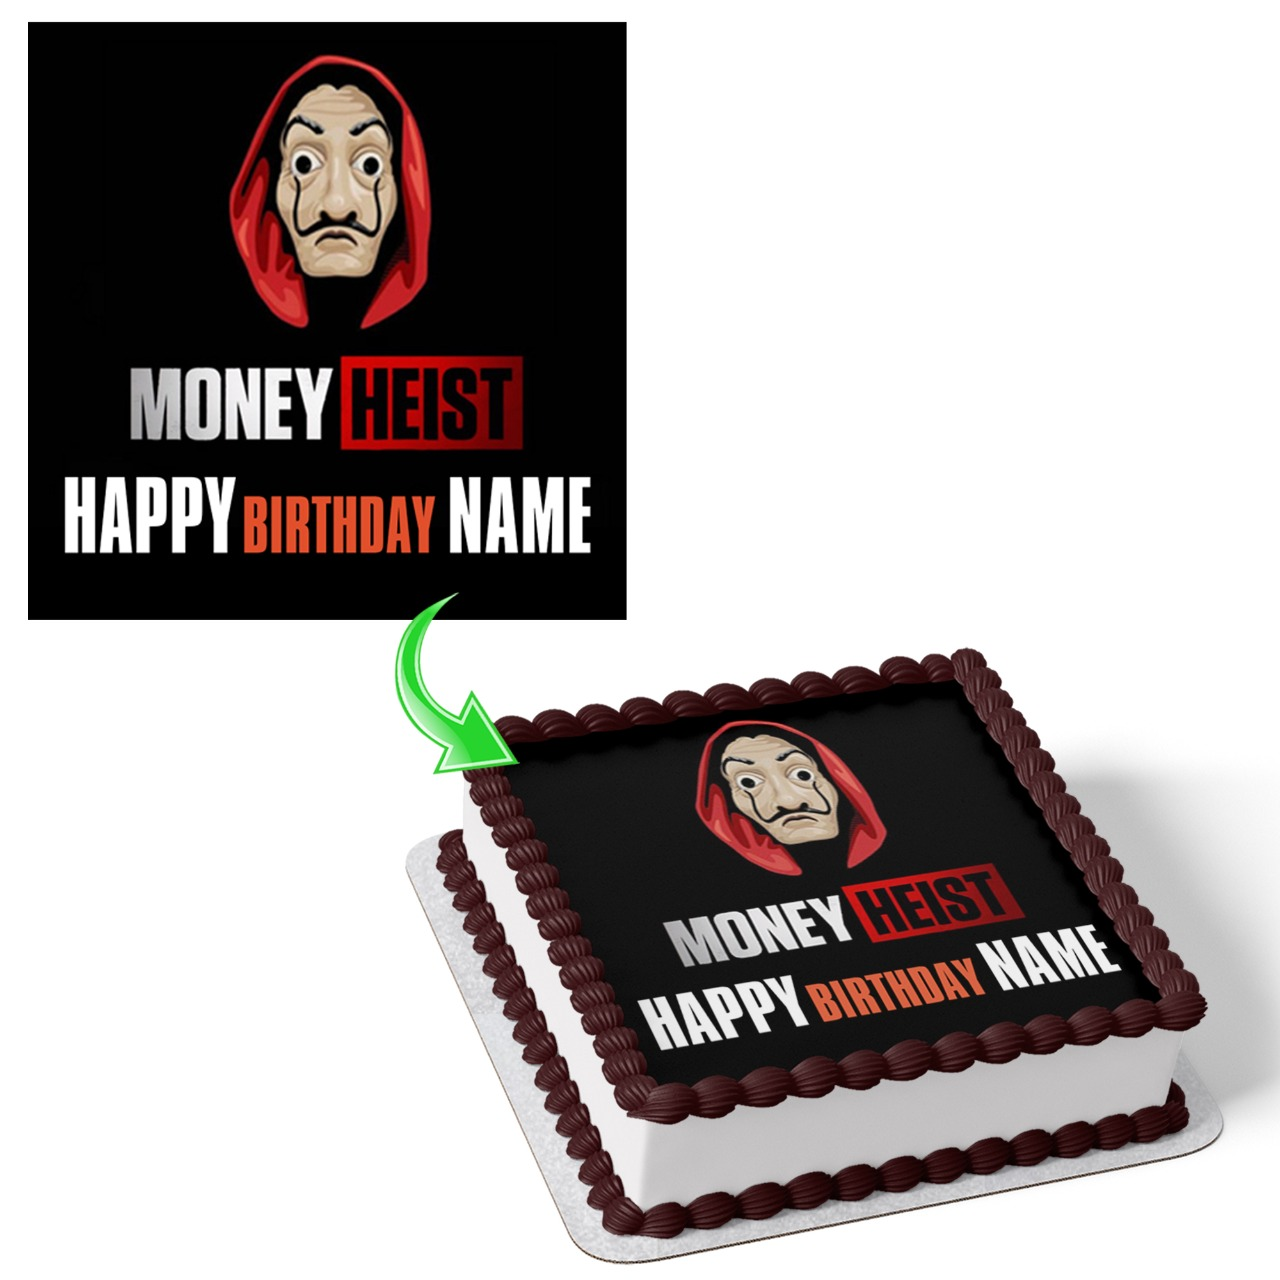 Money Heist Cake